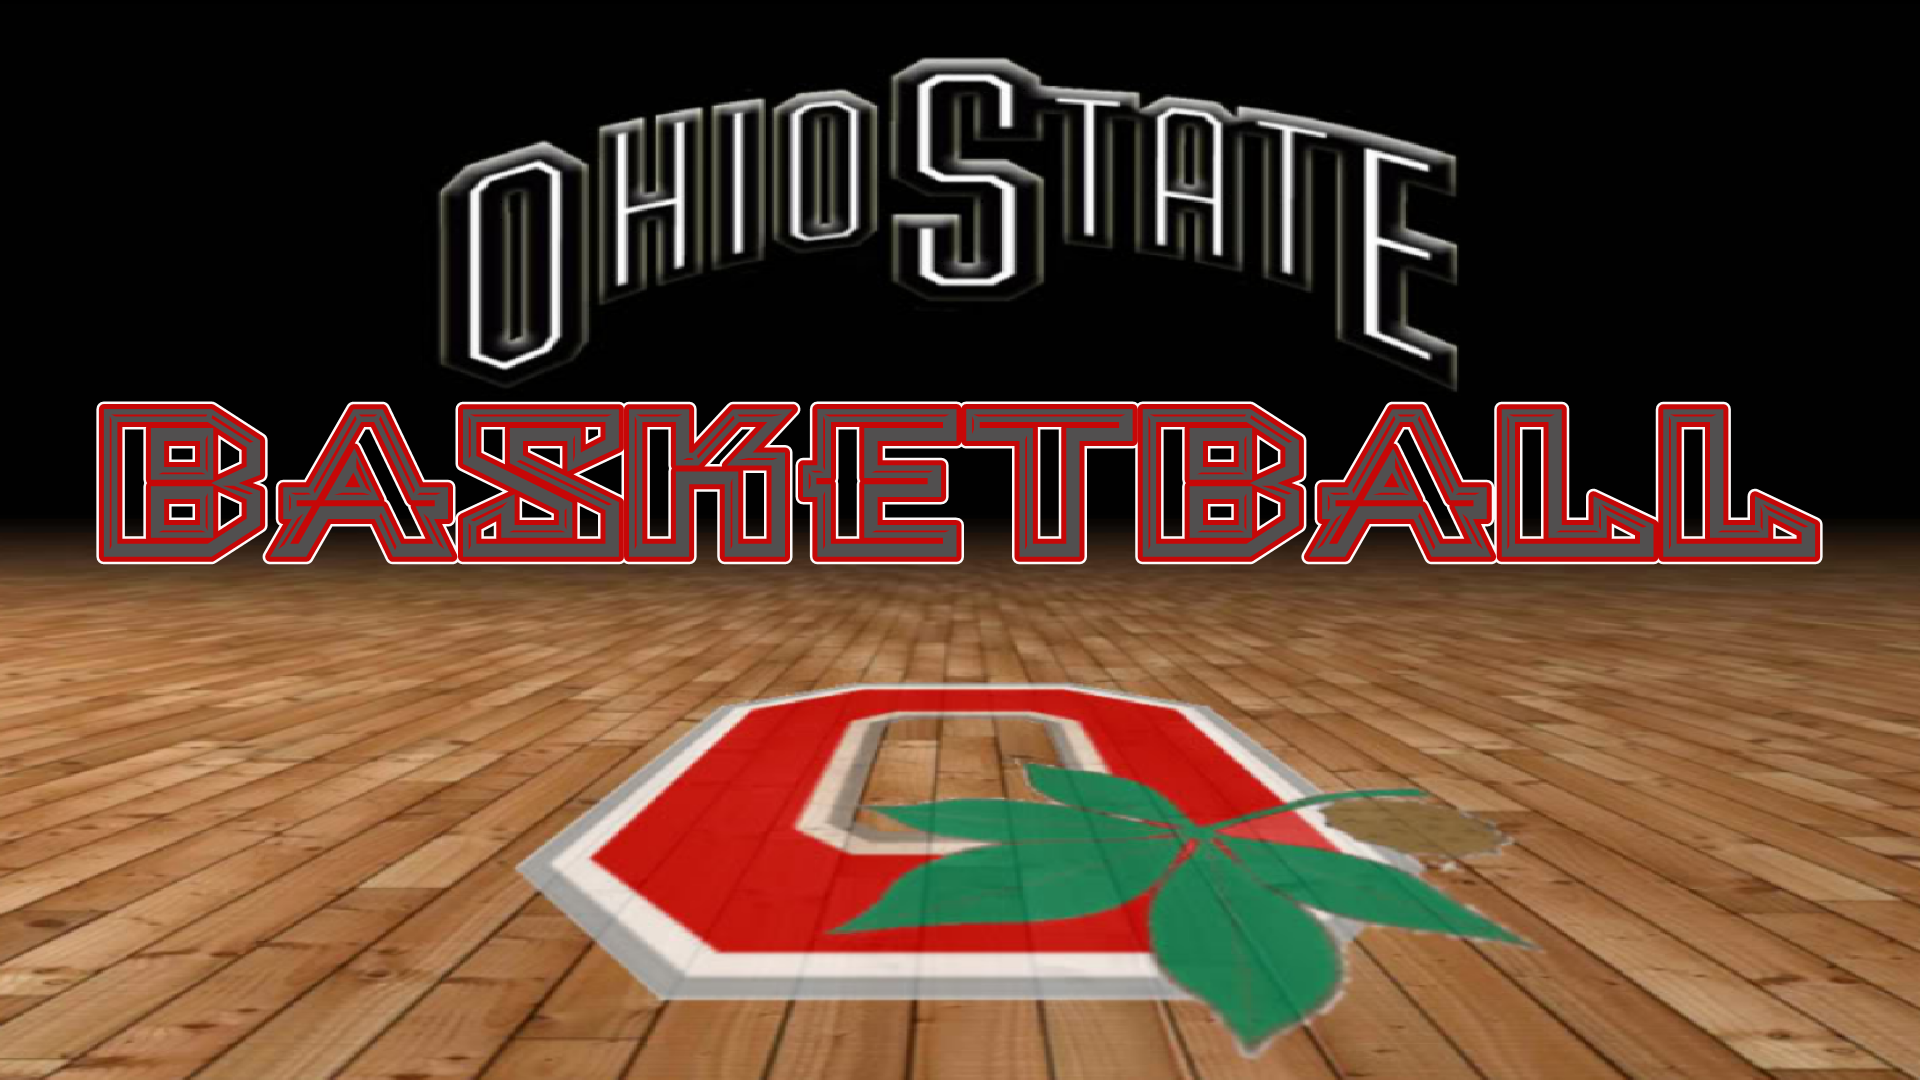 Ohio State Buckeyes Basketball Red Block O - Floor - HD Wallpaper 